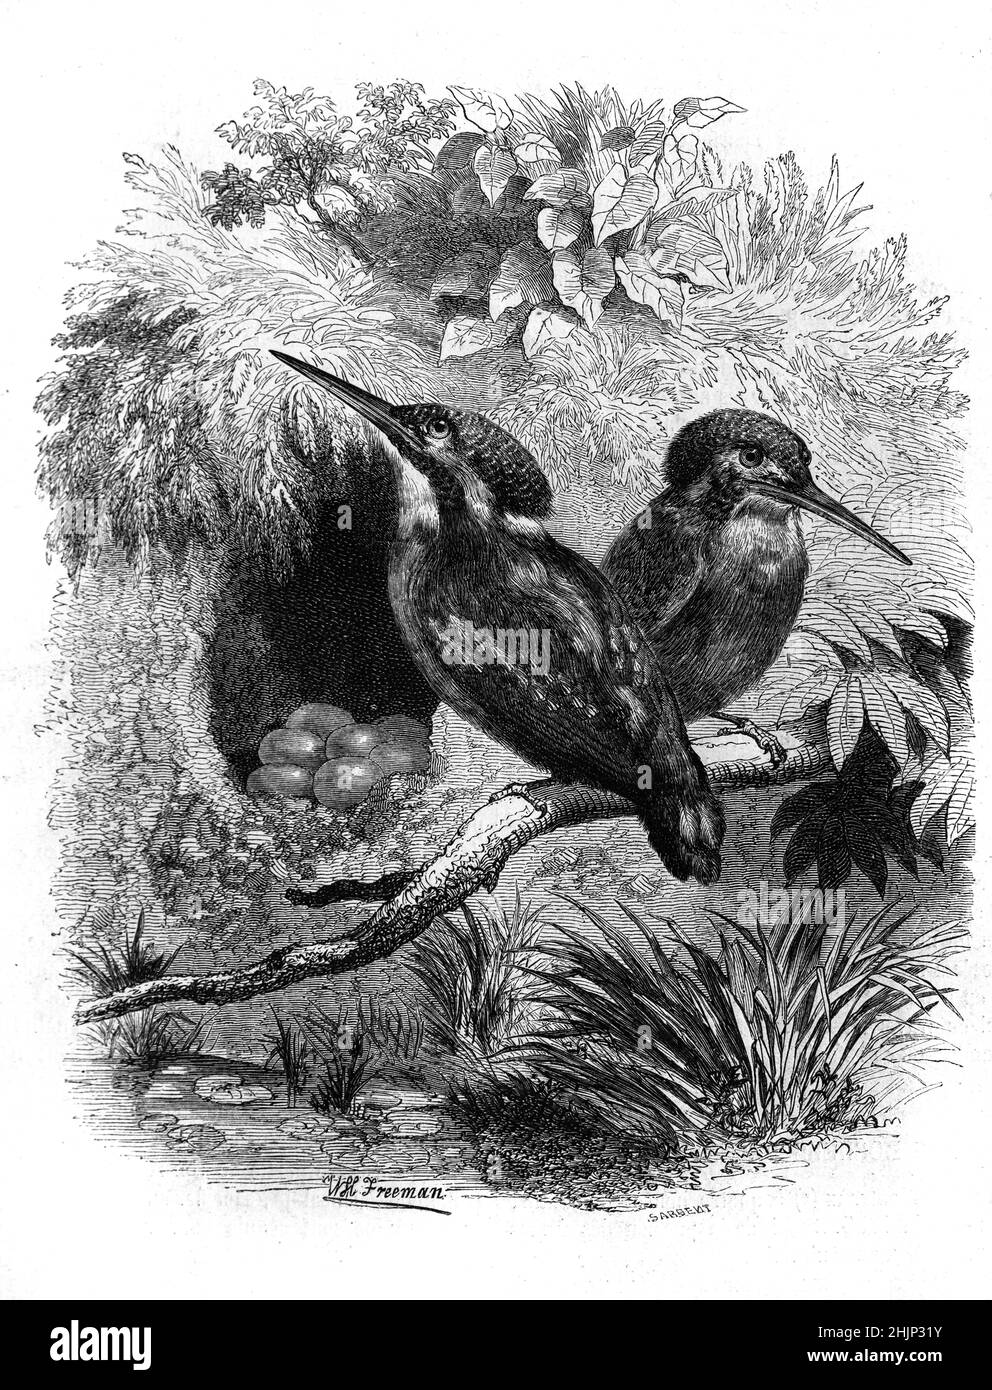 Kingfisher nest Black and White Stock Photos & Images - Alamy